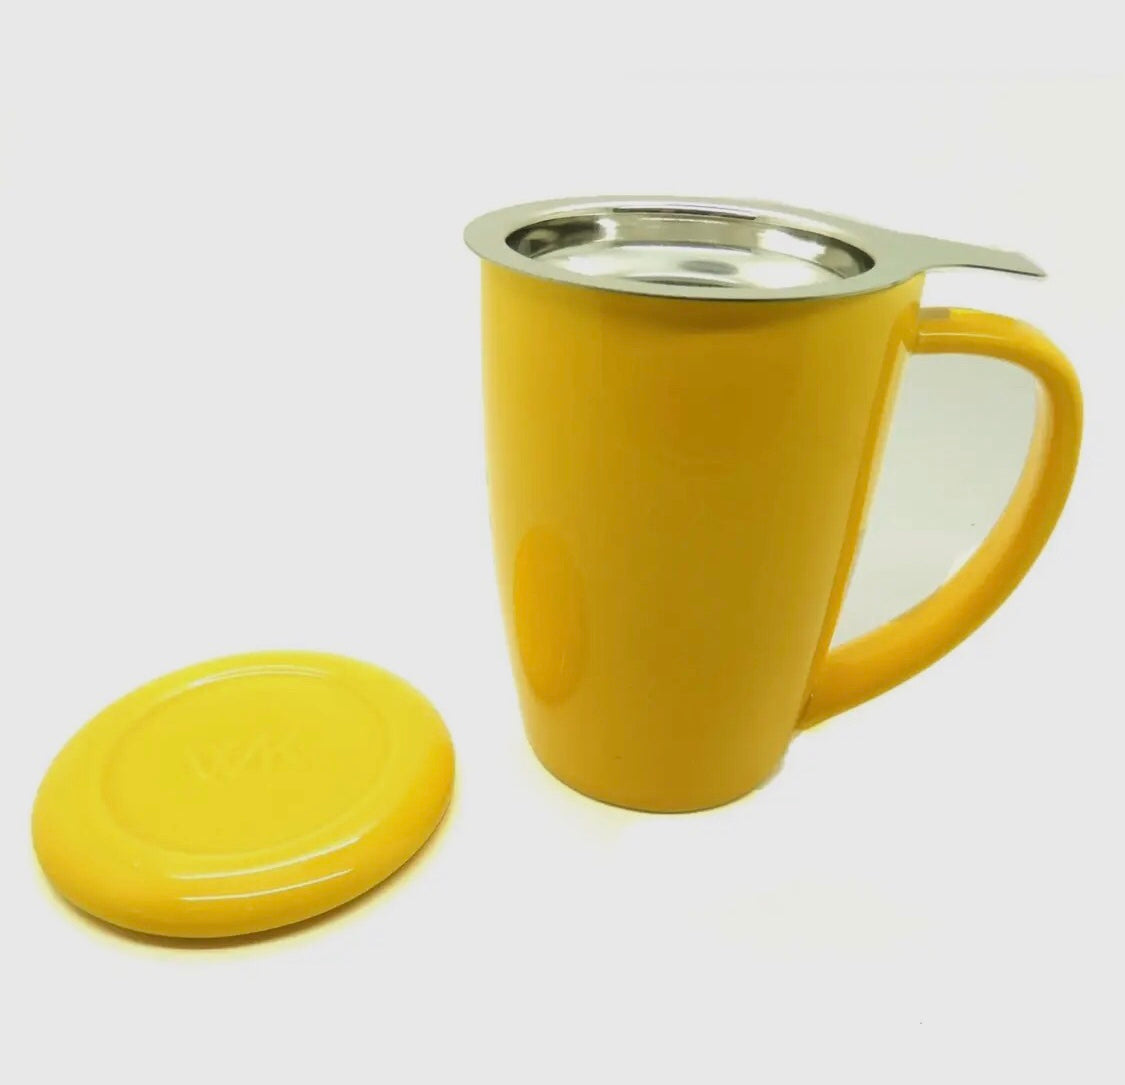 The Lil Steep - 13.5 oz Ceramic Mug with Infuser